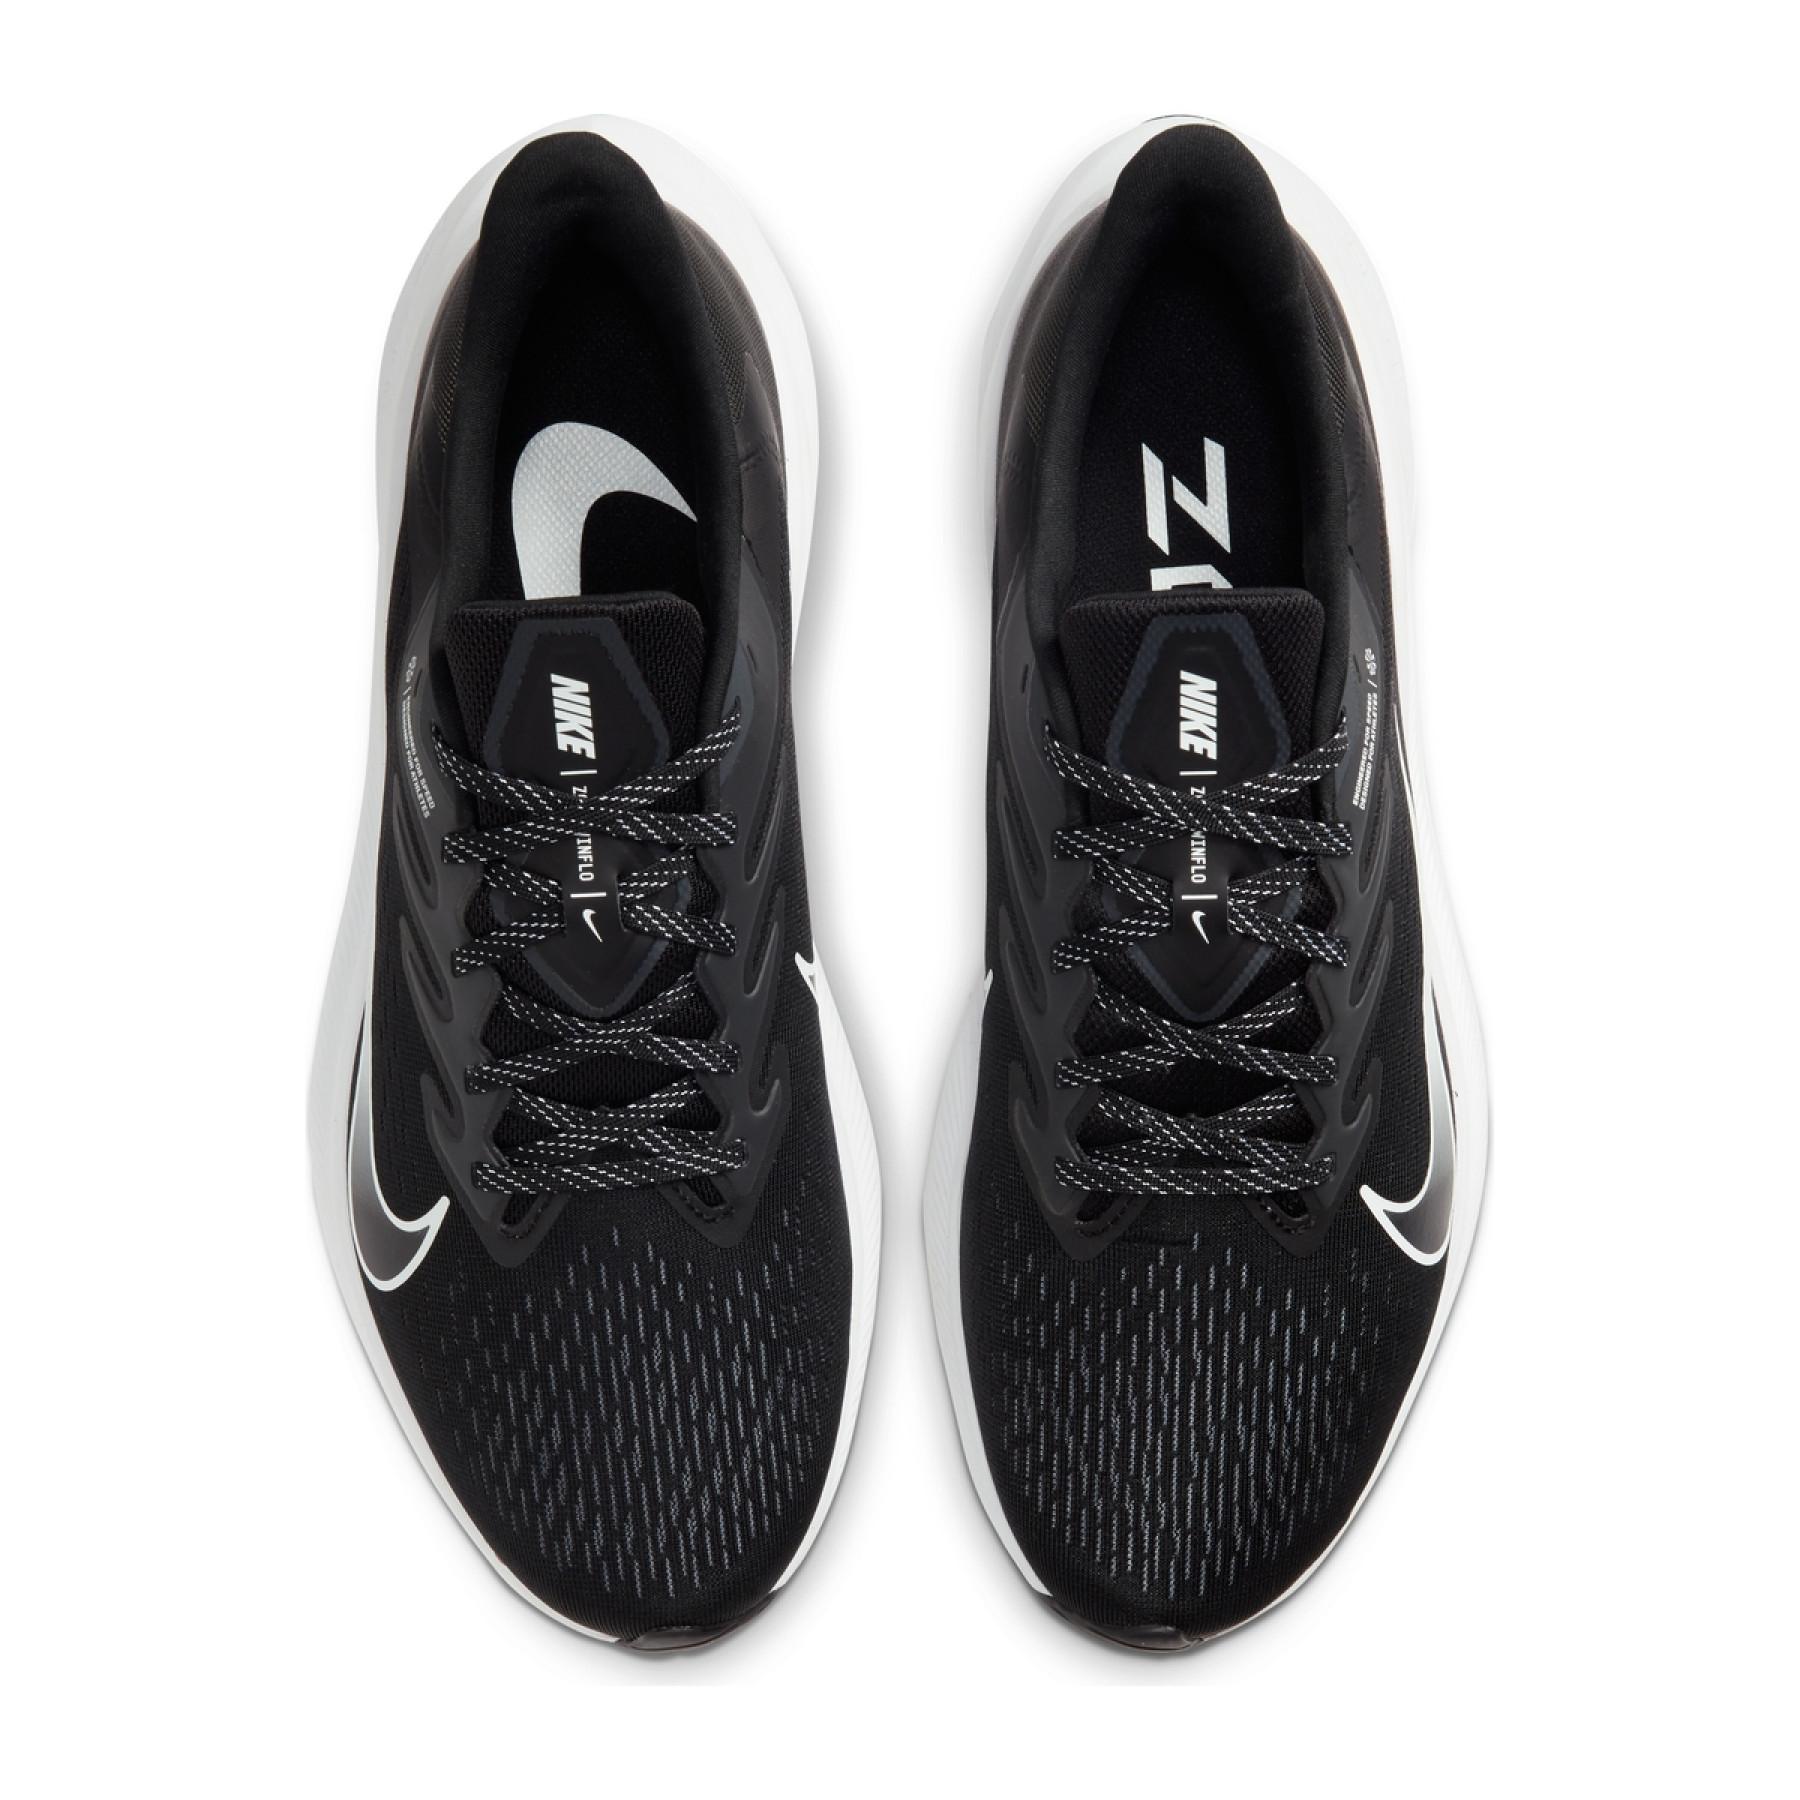 Zapatos Nike Air Zoom Winflo 7